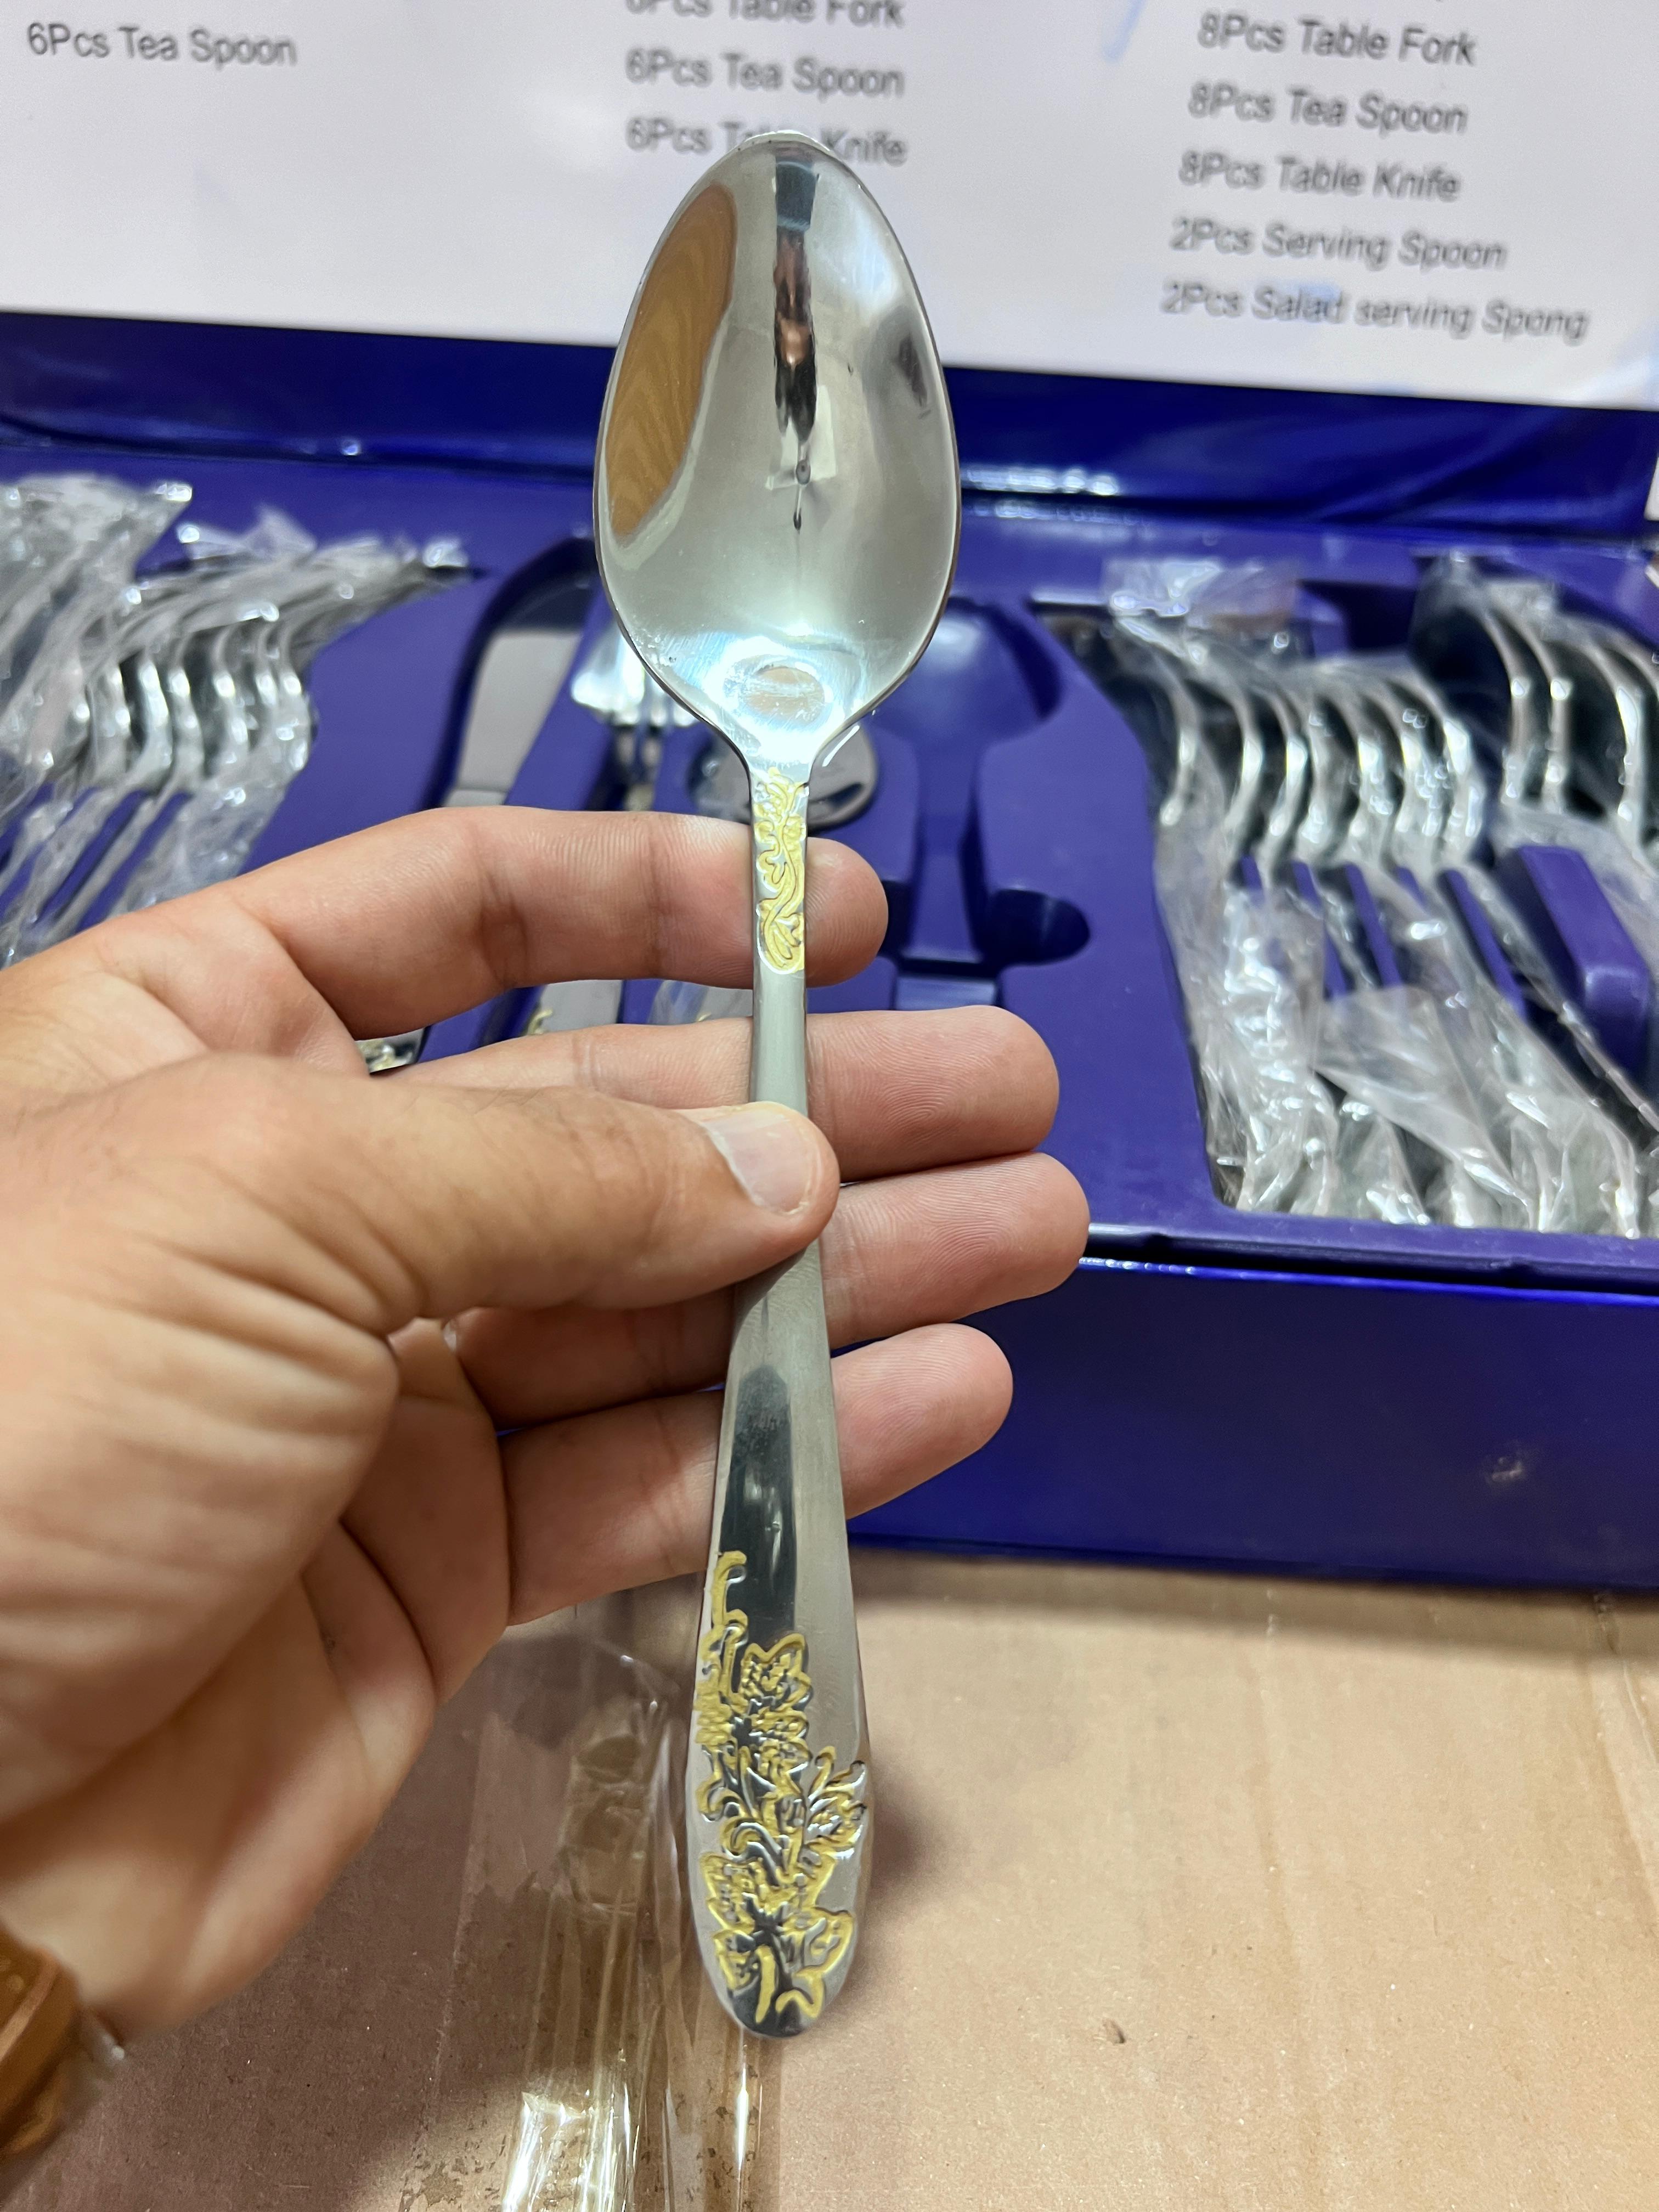 Germany imported Zepter international cutlery Set 36pcs